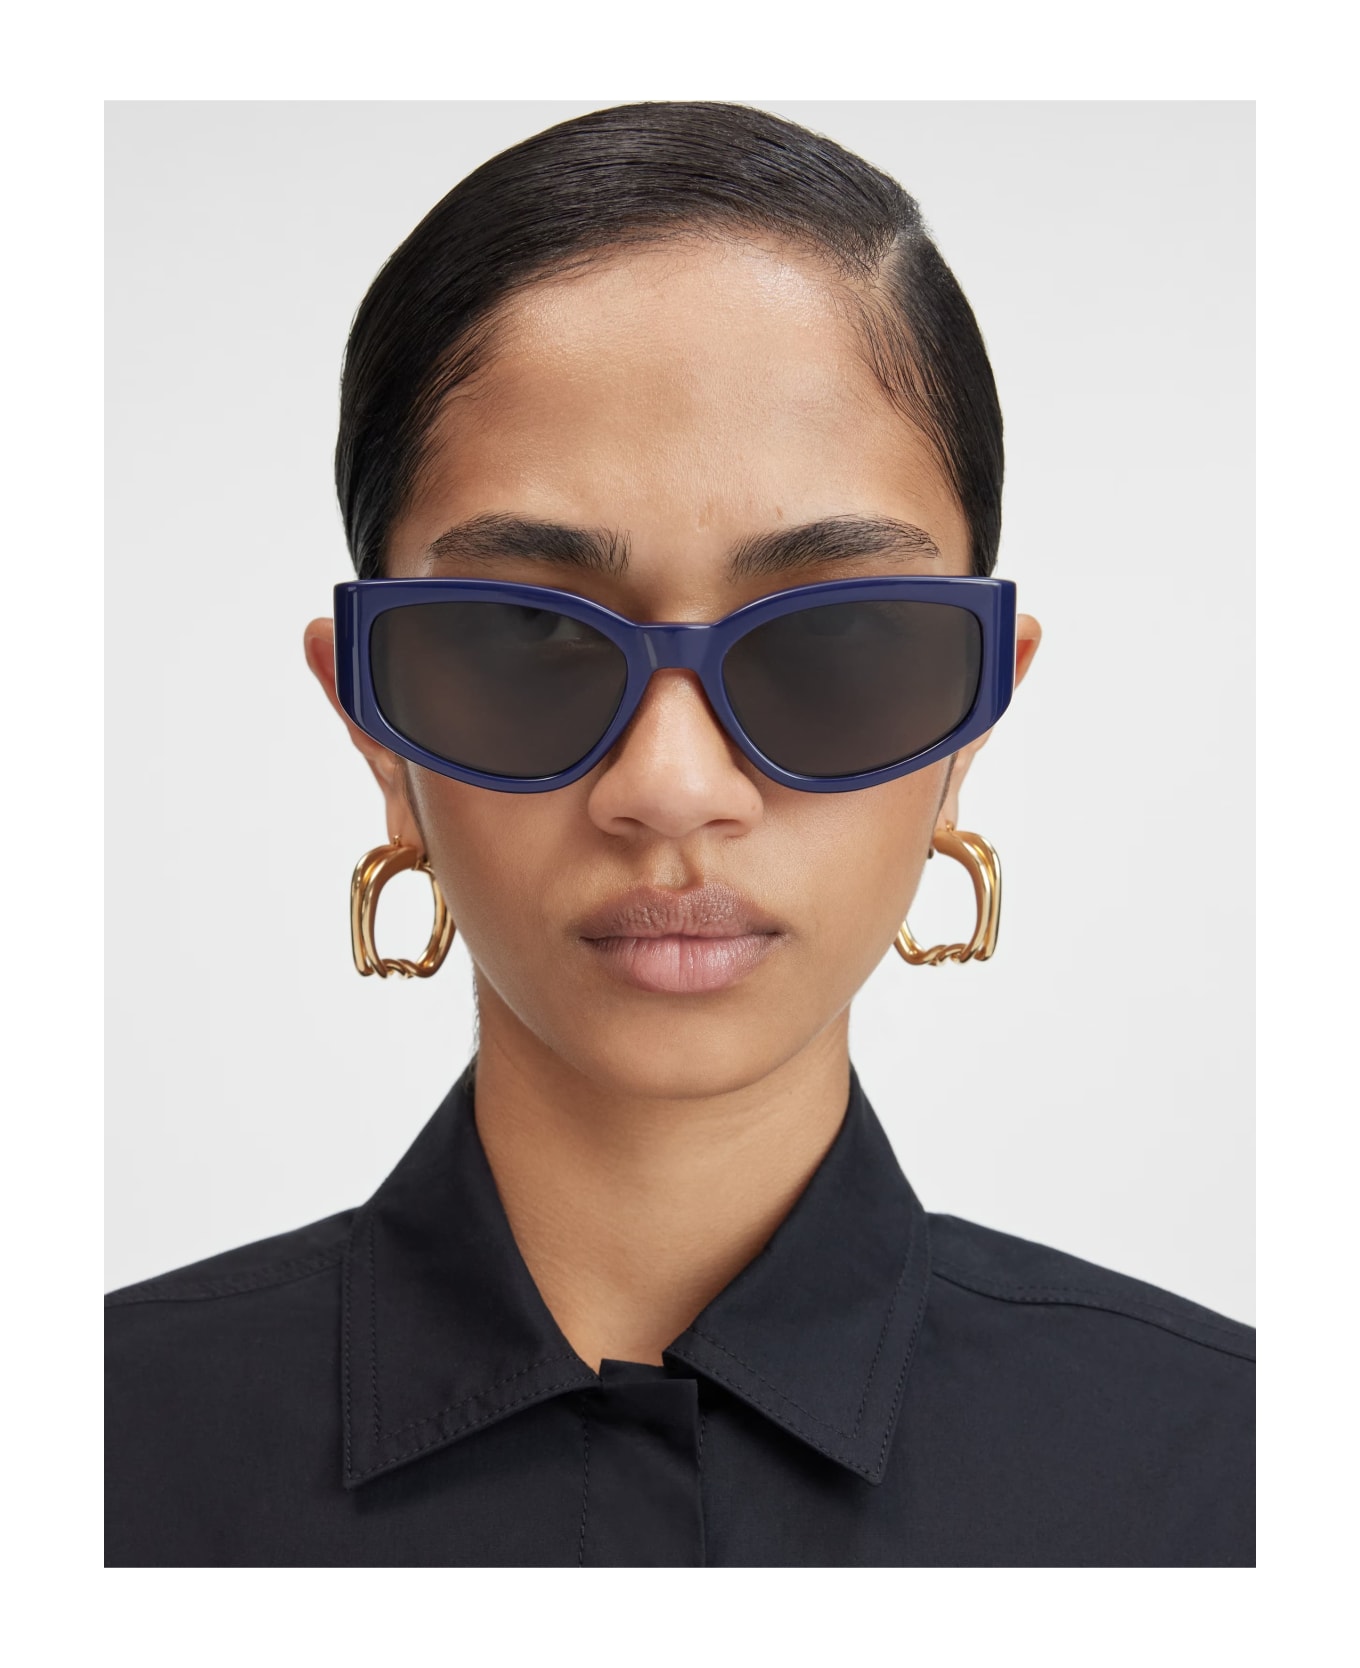 Jacquemus Gala - Navy Sunglasses - navy blue